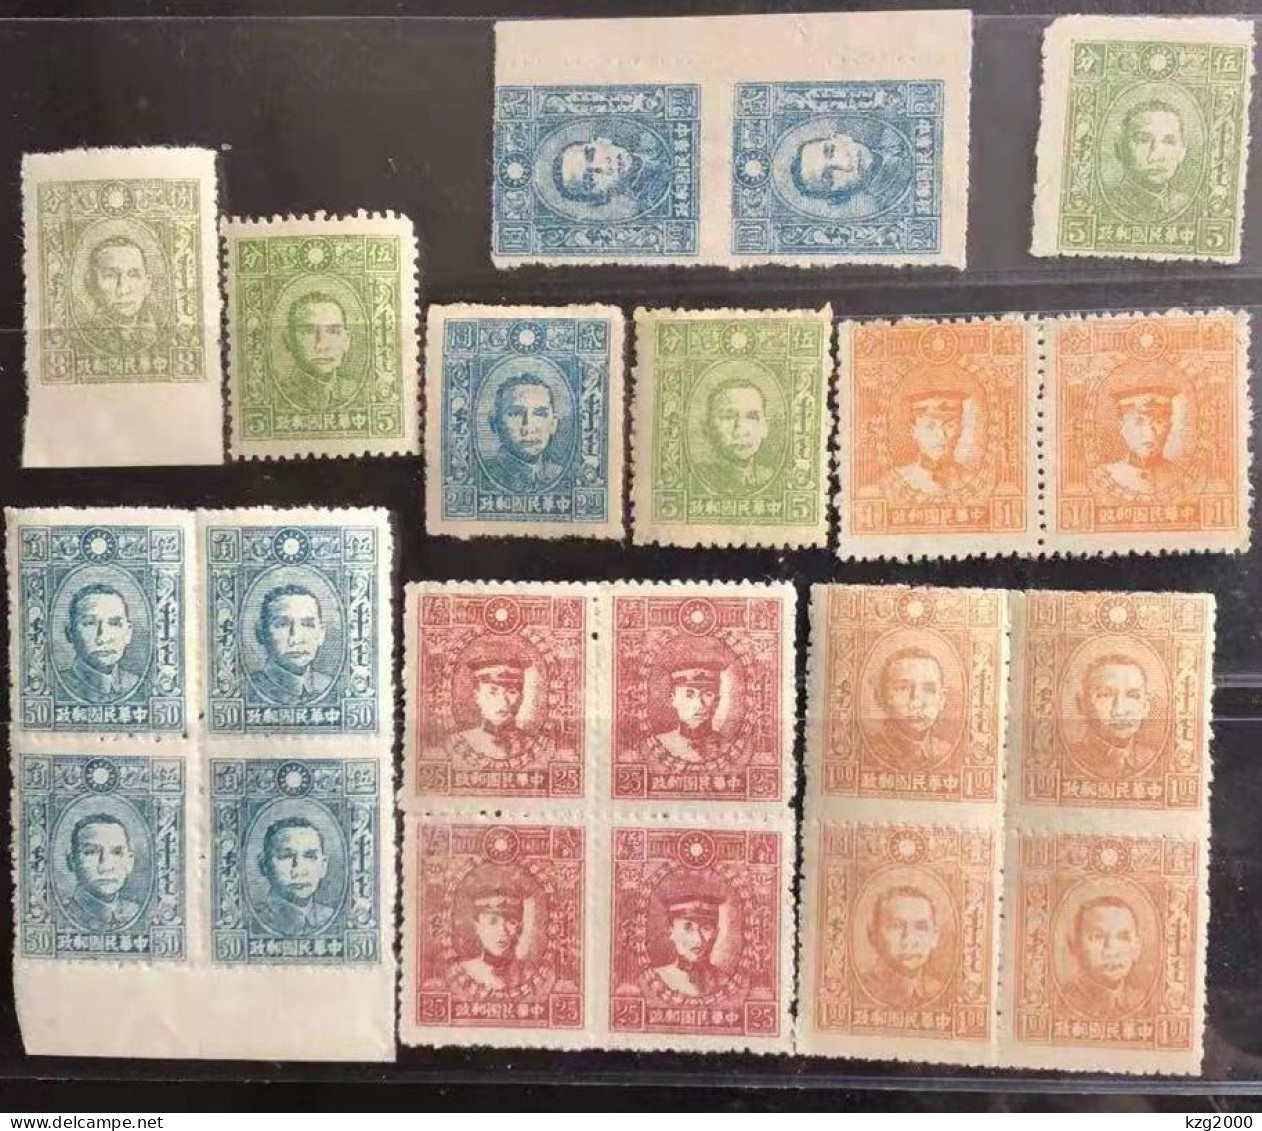 China Stamps 1941 Japanese Occupation China “Meng Jiang” Mongolian Version Unissued - 1941-45 Northern China